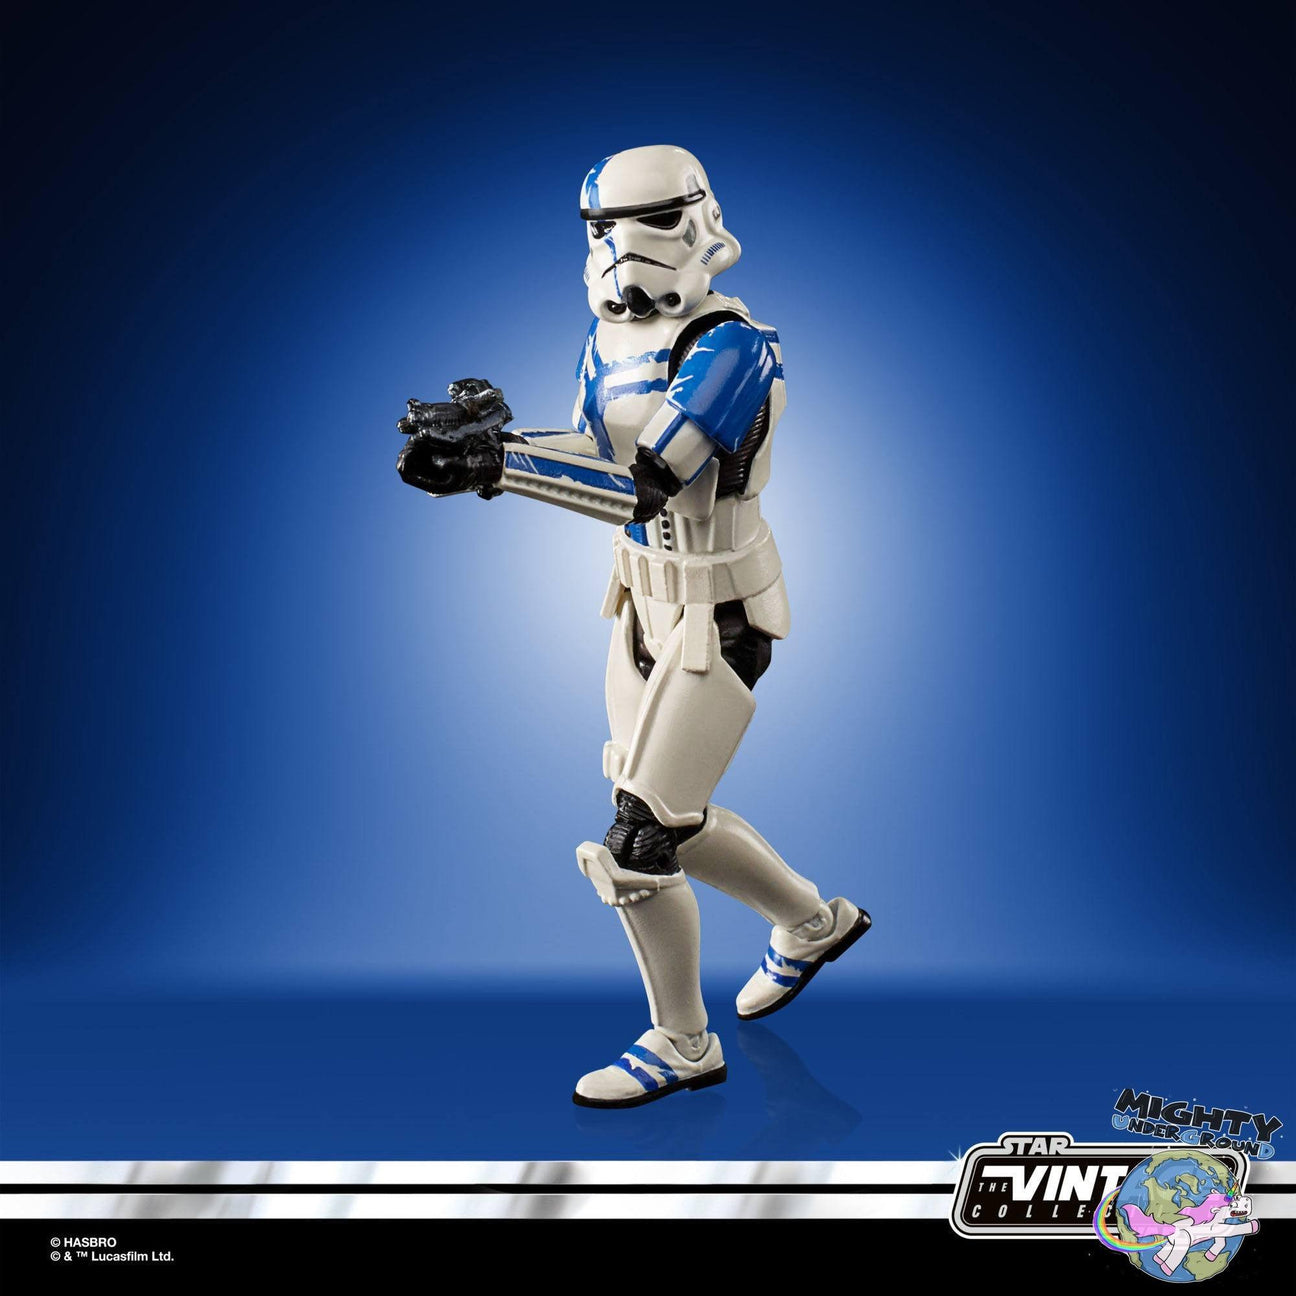 Star Wars Vintage Collection: Stormtrooper Commander (The Force Unleashed) - 10 cm-Actionfiguren-Hasbro-Mighty Underground